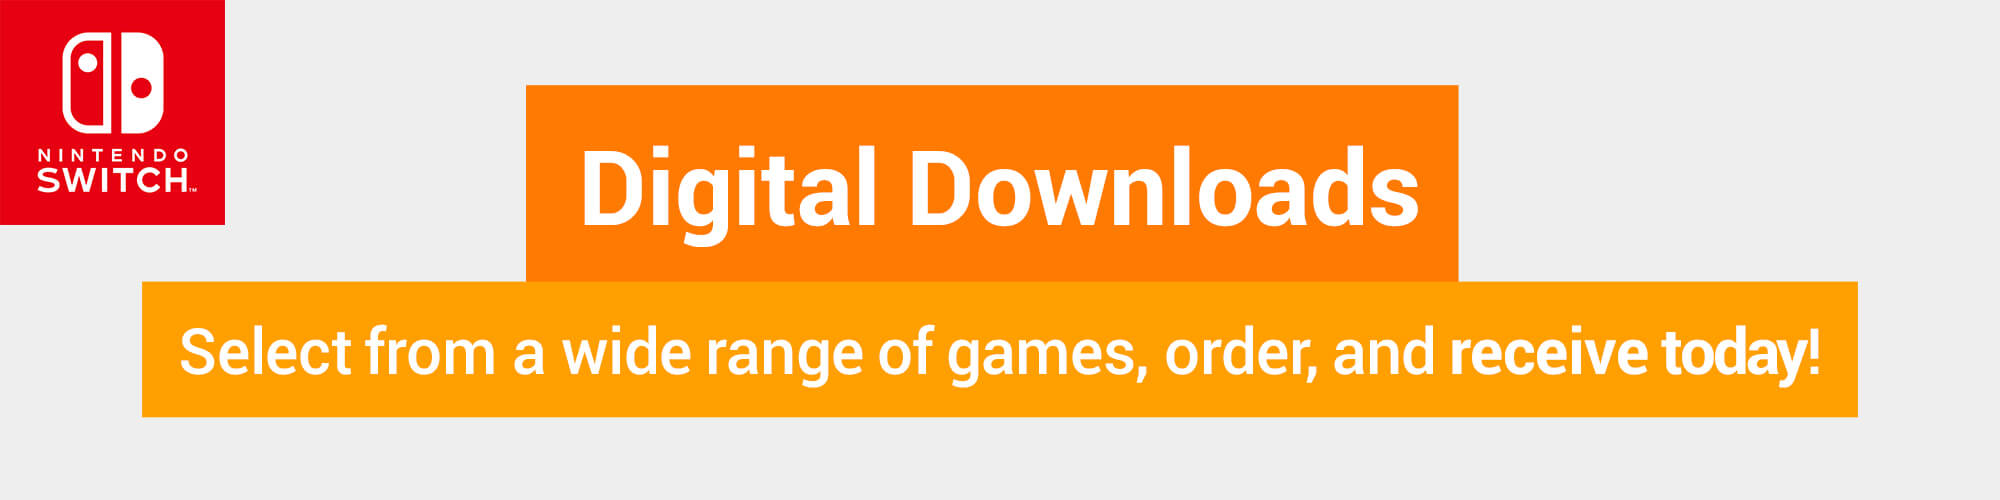 digital download for nintendo switch